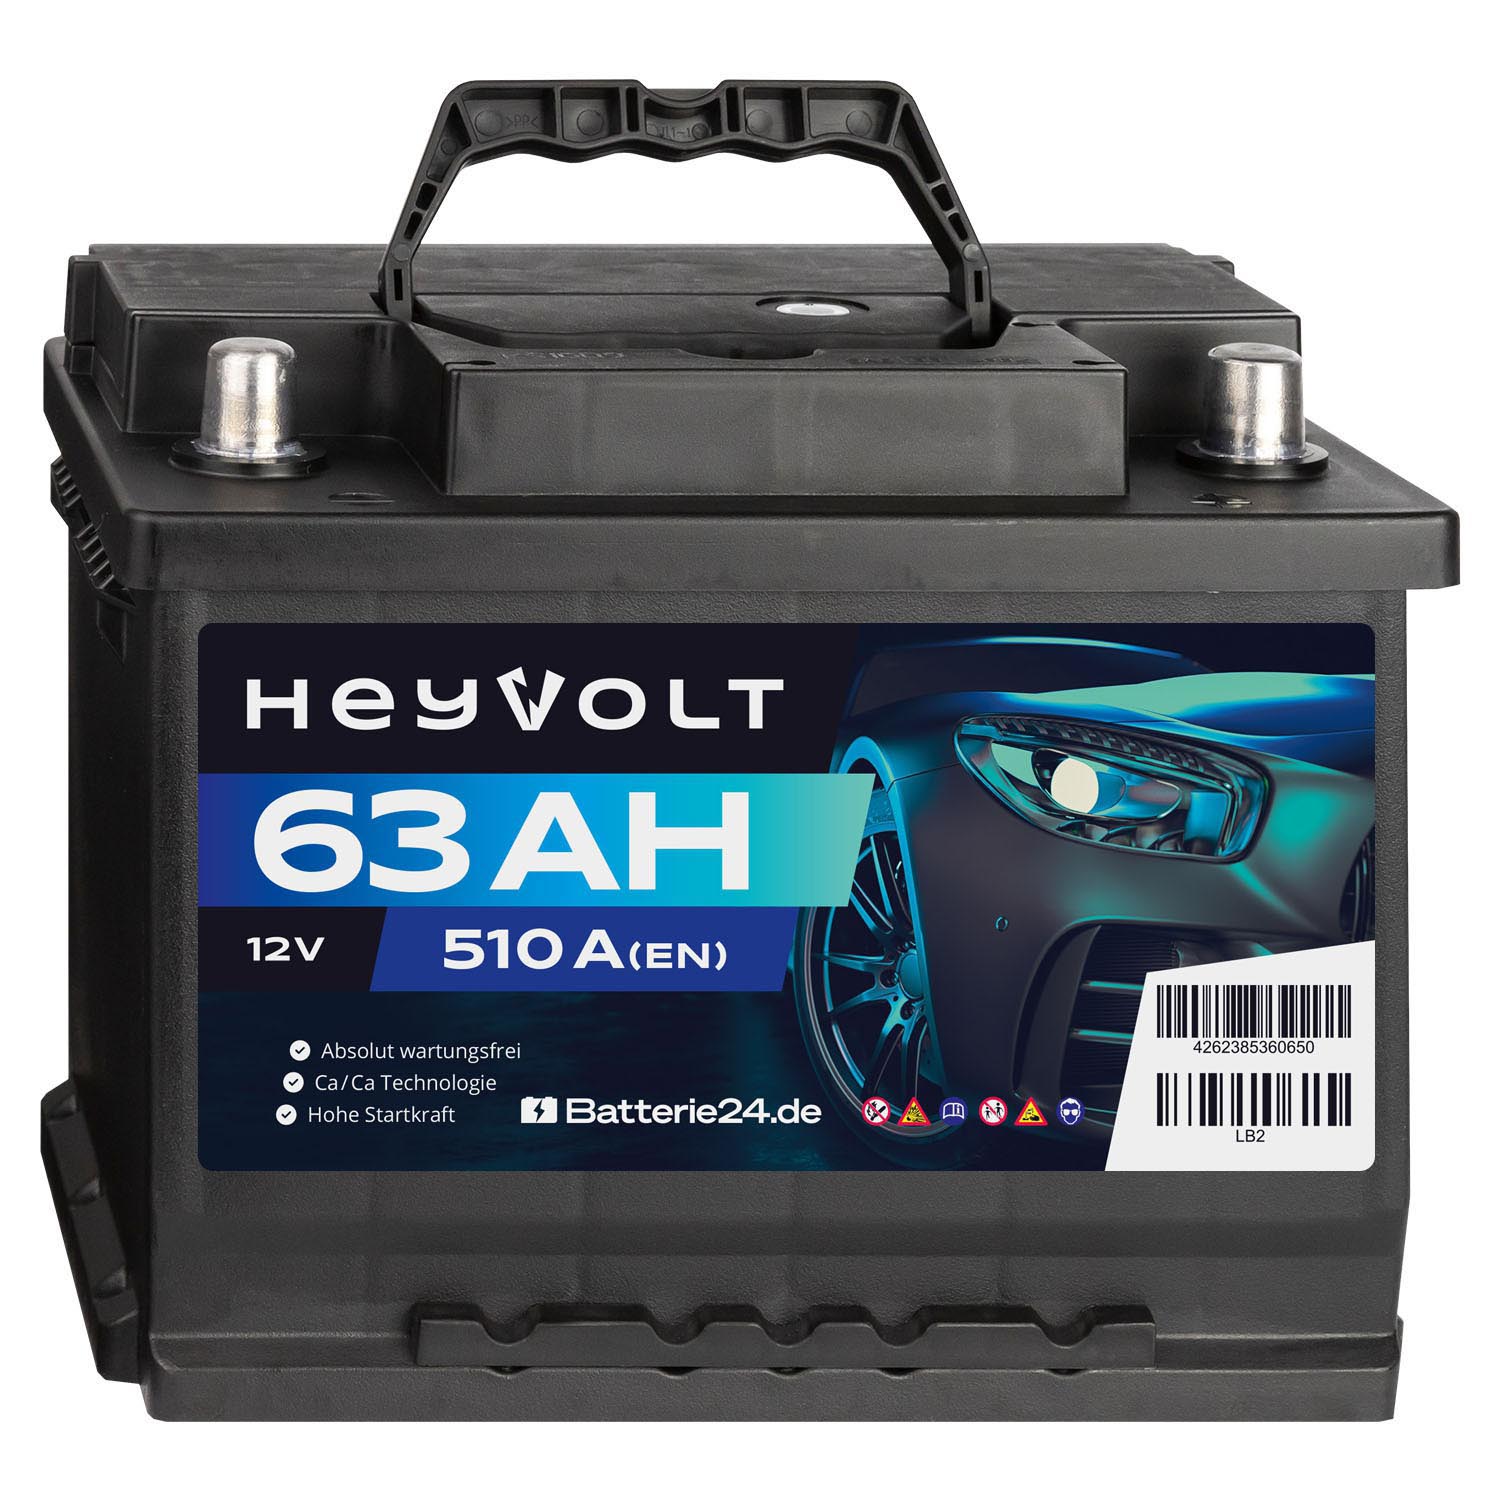 HeyVolt Start Autobatterie 12V 63Ah